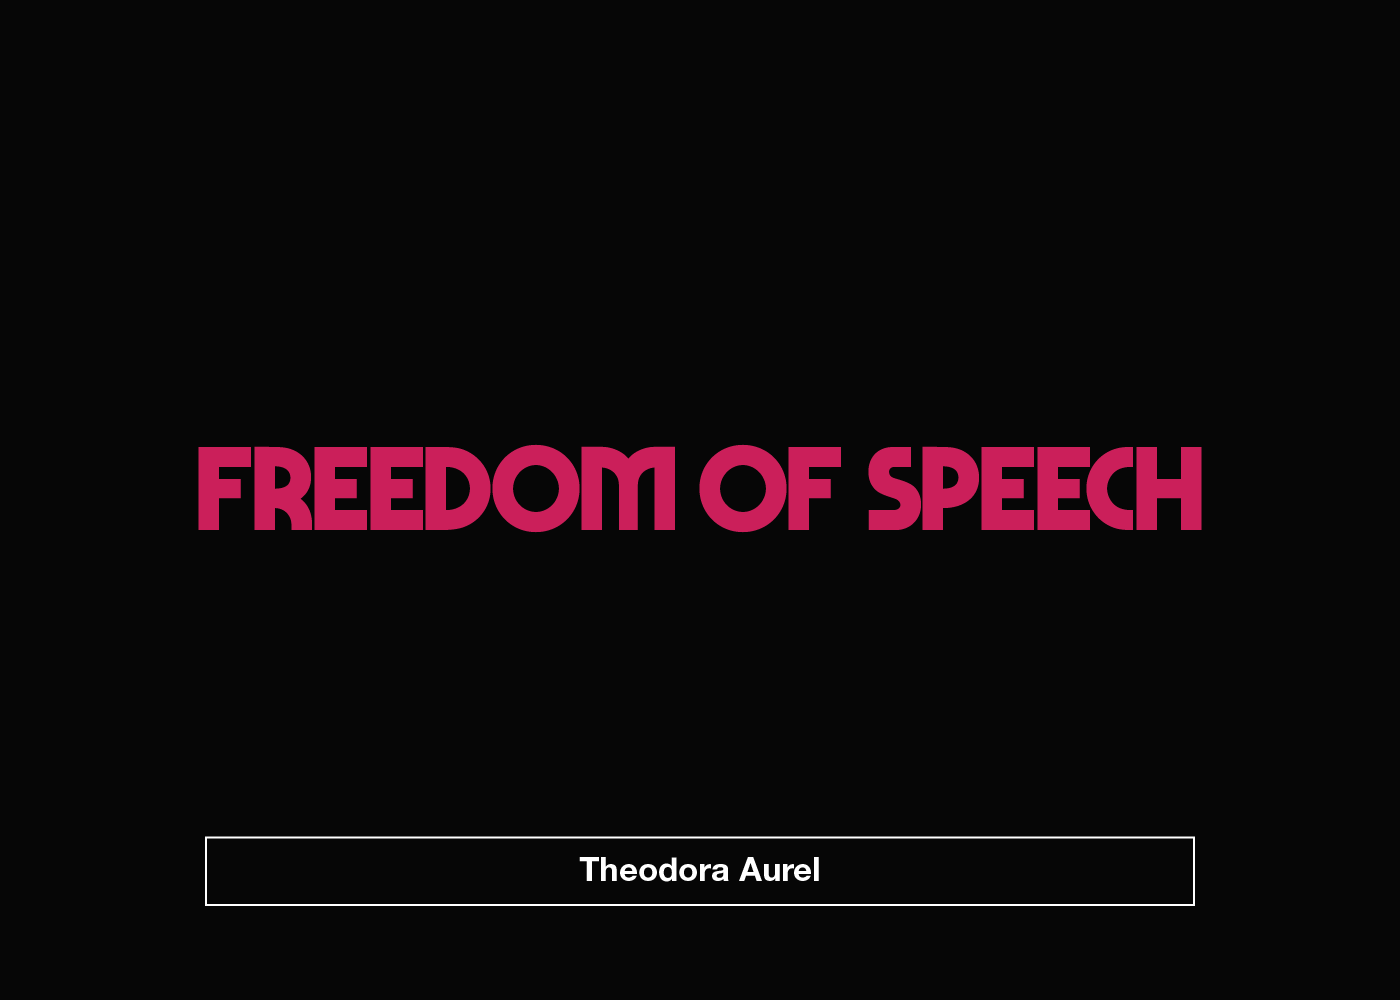 freedom of speech poster